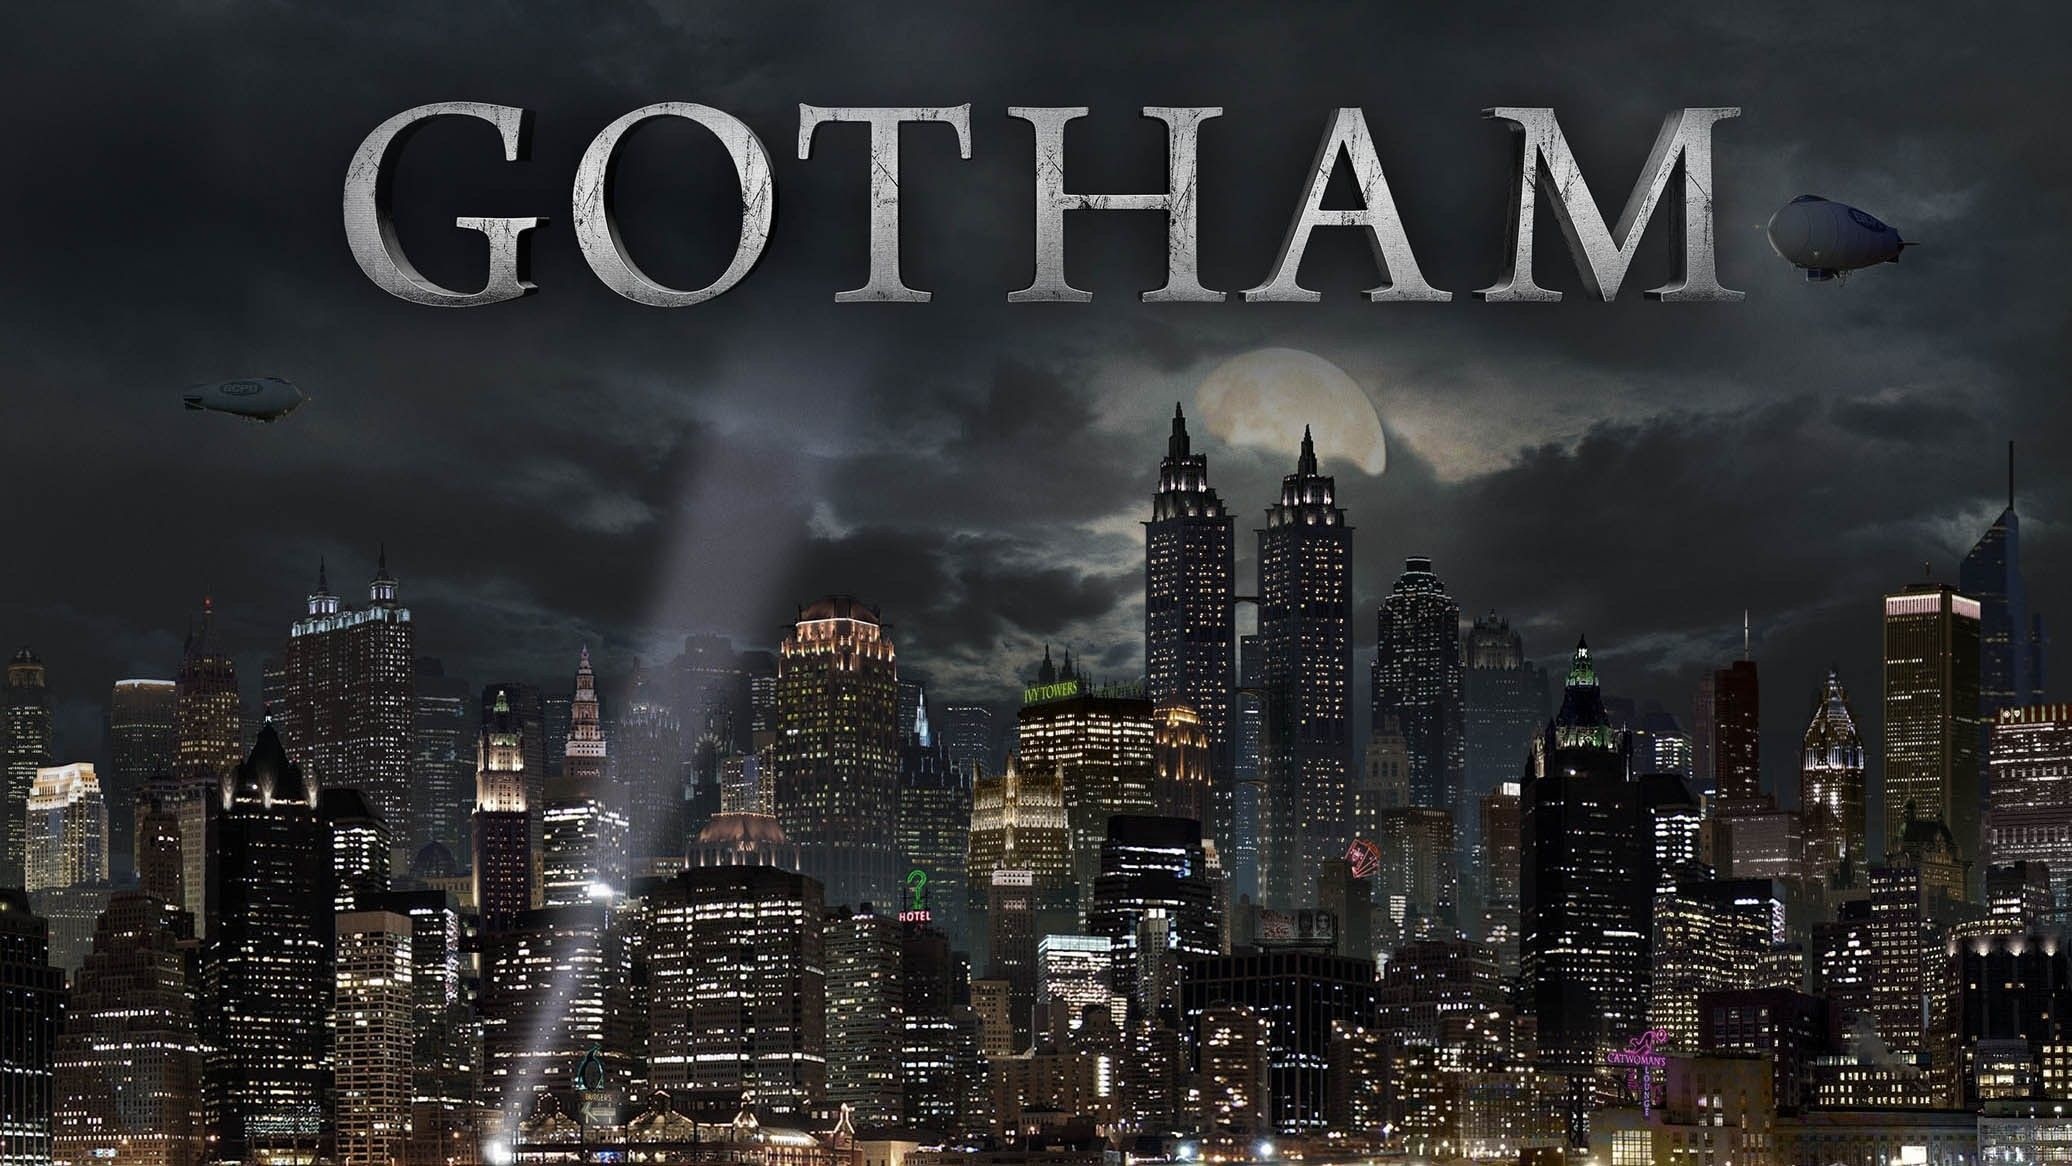 Gotham City, High-definition wallpaper, Urban metropolis, Nighttime cityscape, 2080x1170 HD Desktop